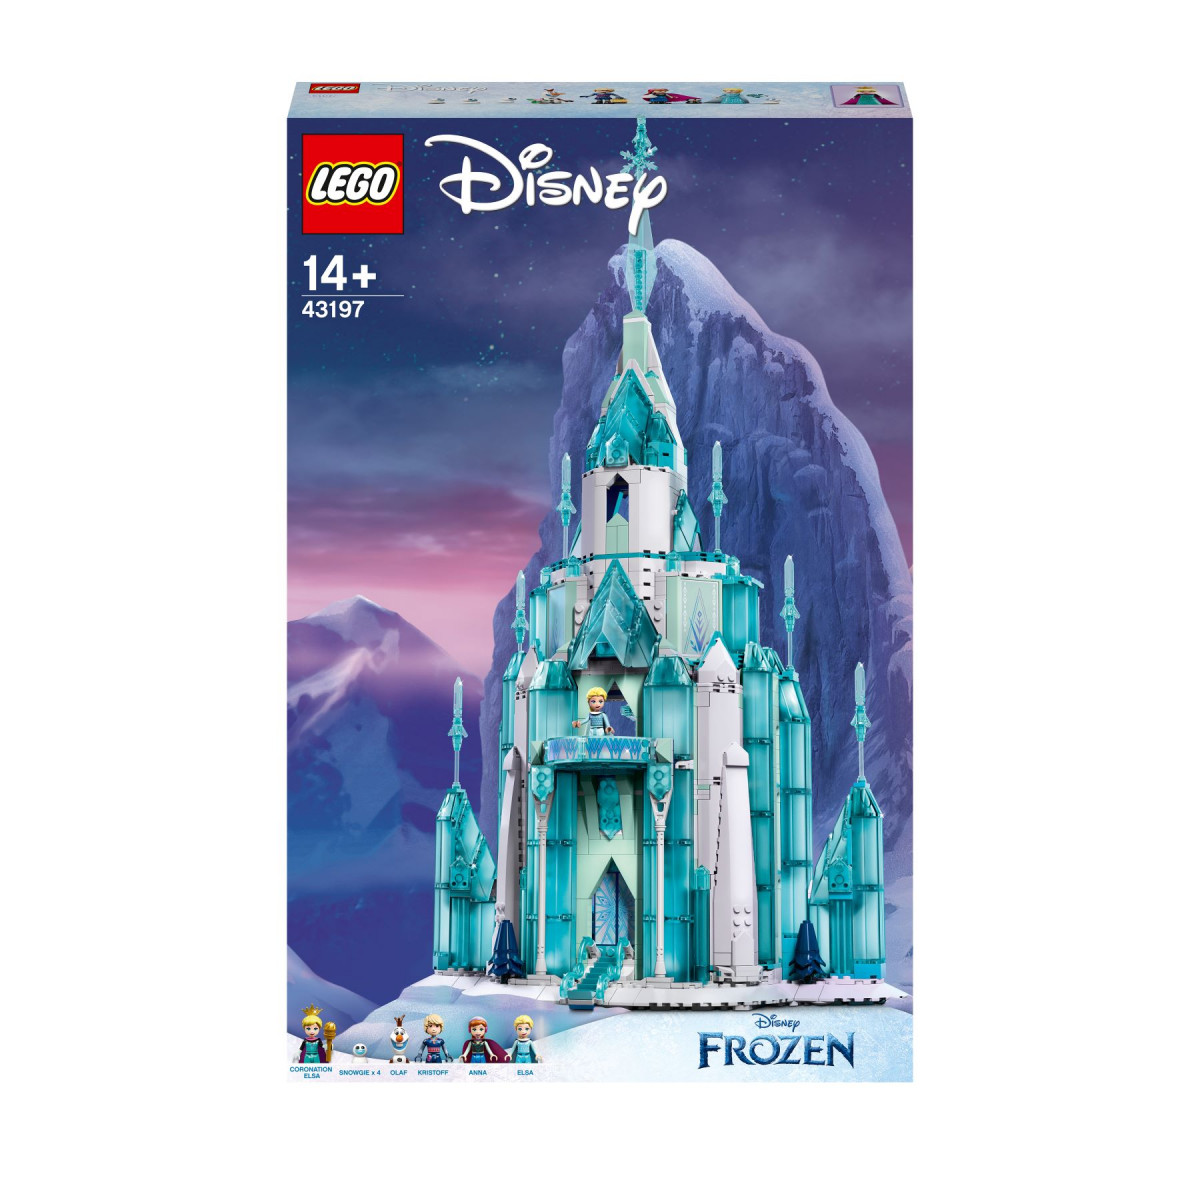 LEGO Disney Princess The Ice Castle Frozen Set 43197